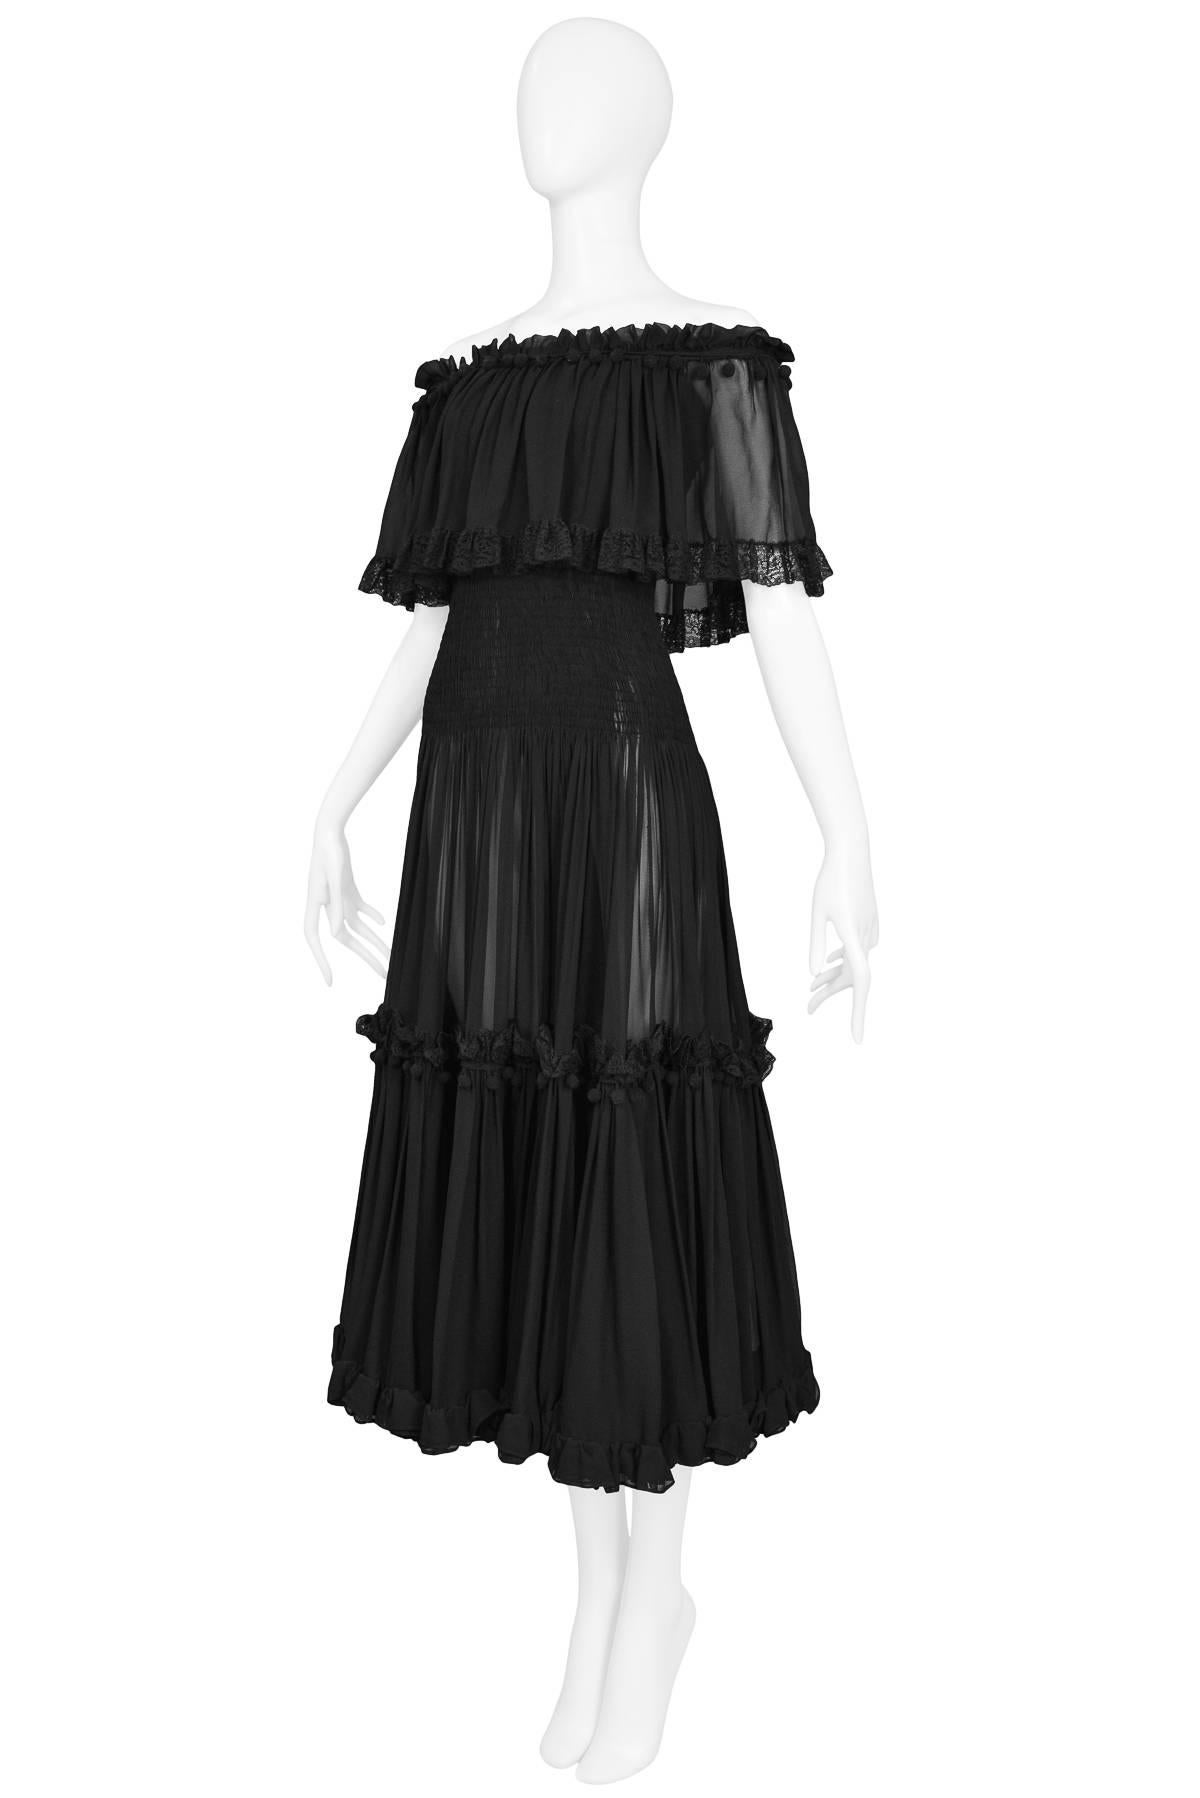 Black Yves Saint Laurent Vintage Gypsy Dress, 1970s 